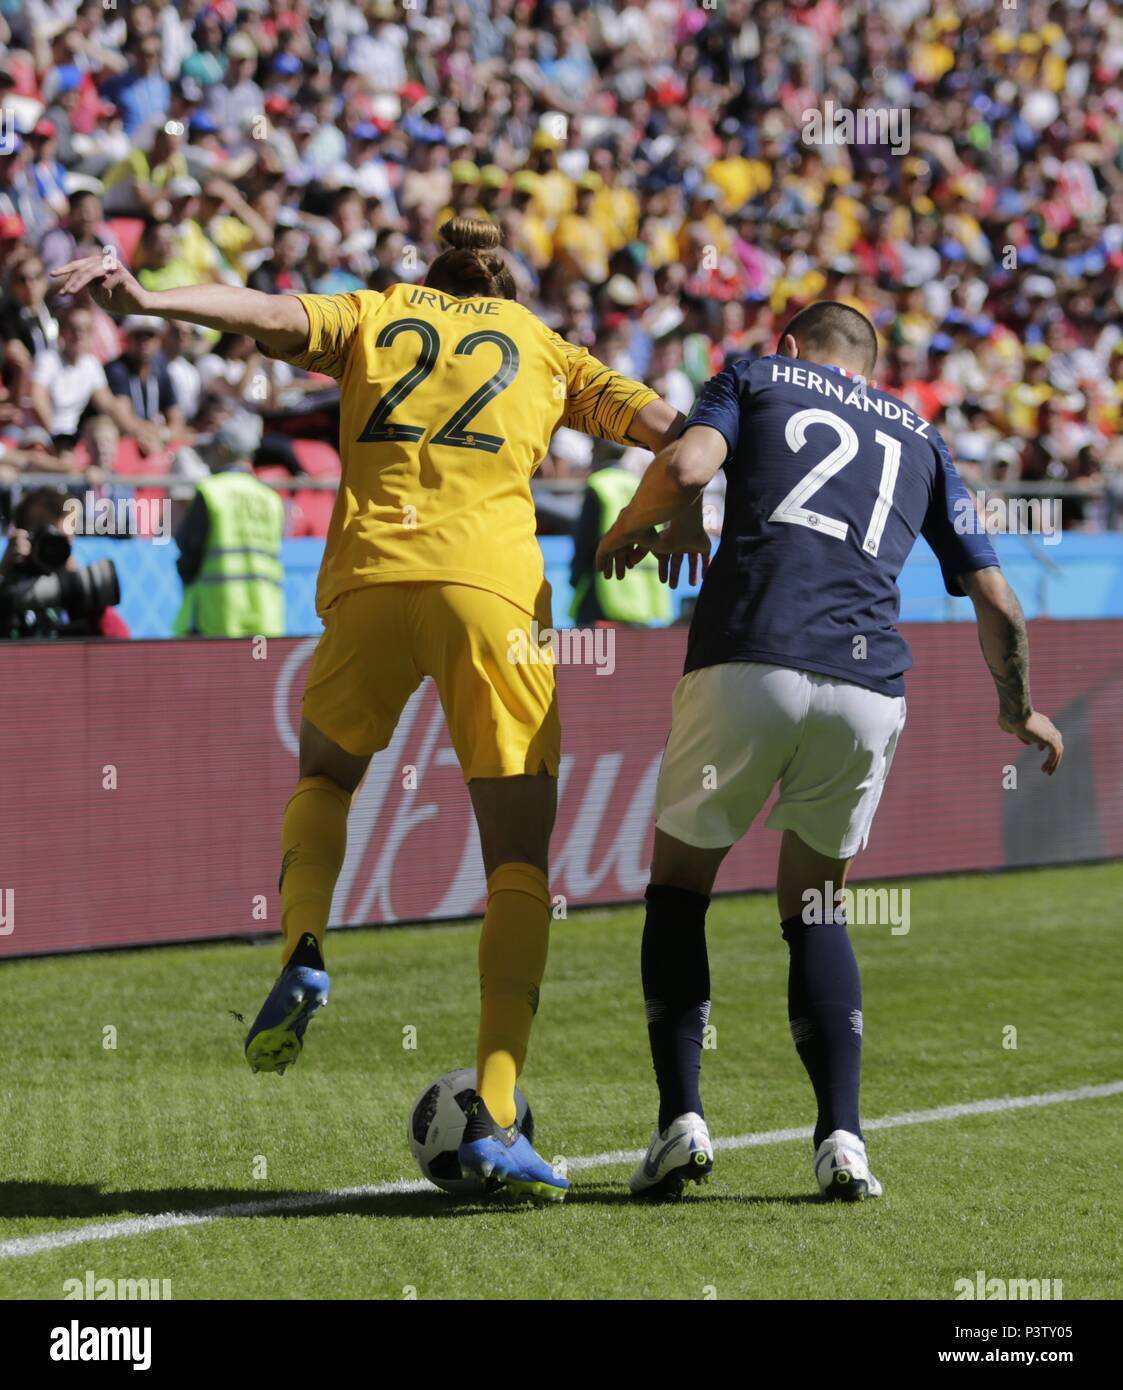 Junio 16, - Rusia, Kazan. - Copa Mundial de la FIFA 2018. Grupo C. v (uniforme amarillo), 2:1. En la foto: Jackson Irvine (22) de Australia y Lucas Hernández (21), de Francia Fotografía de stock - Alamy